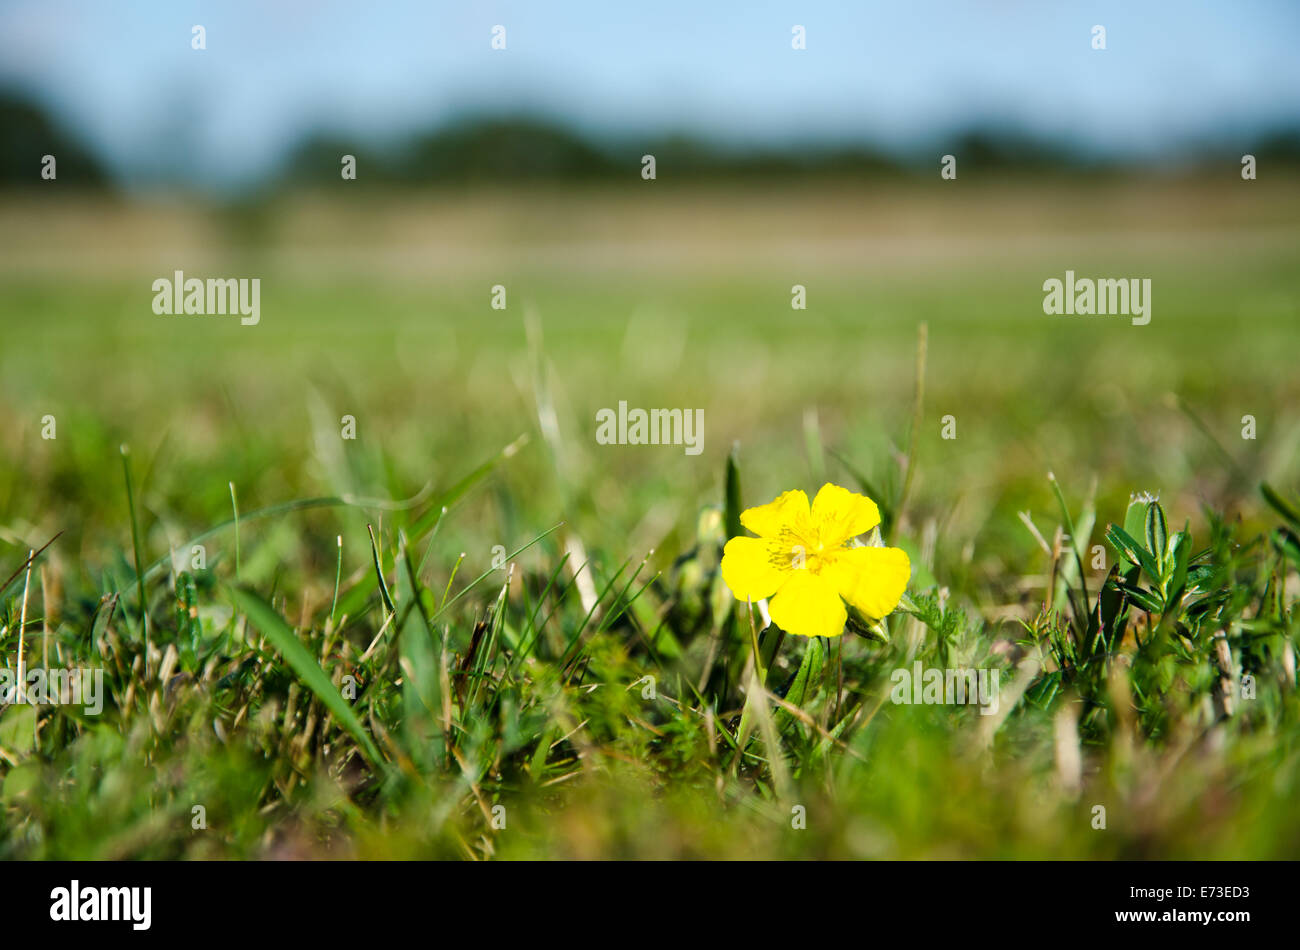 Closeup of a single yellow rockrose in green grass Stock Photo